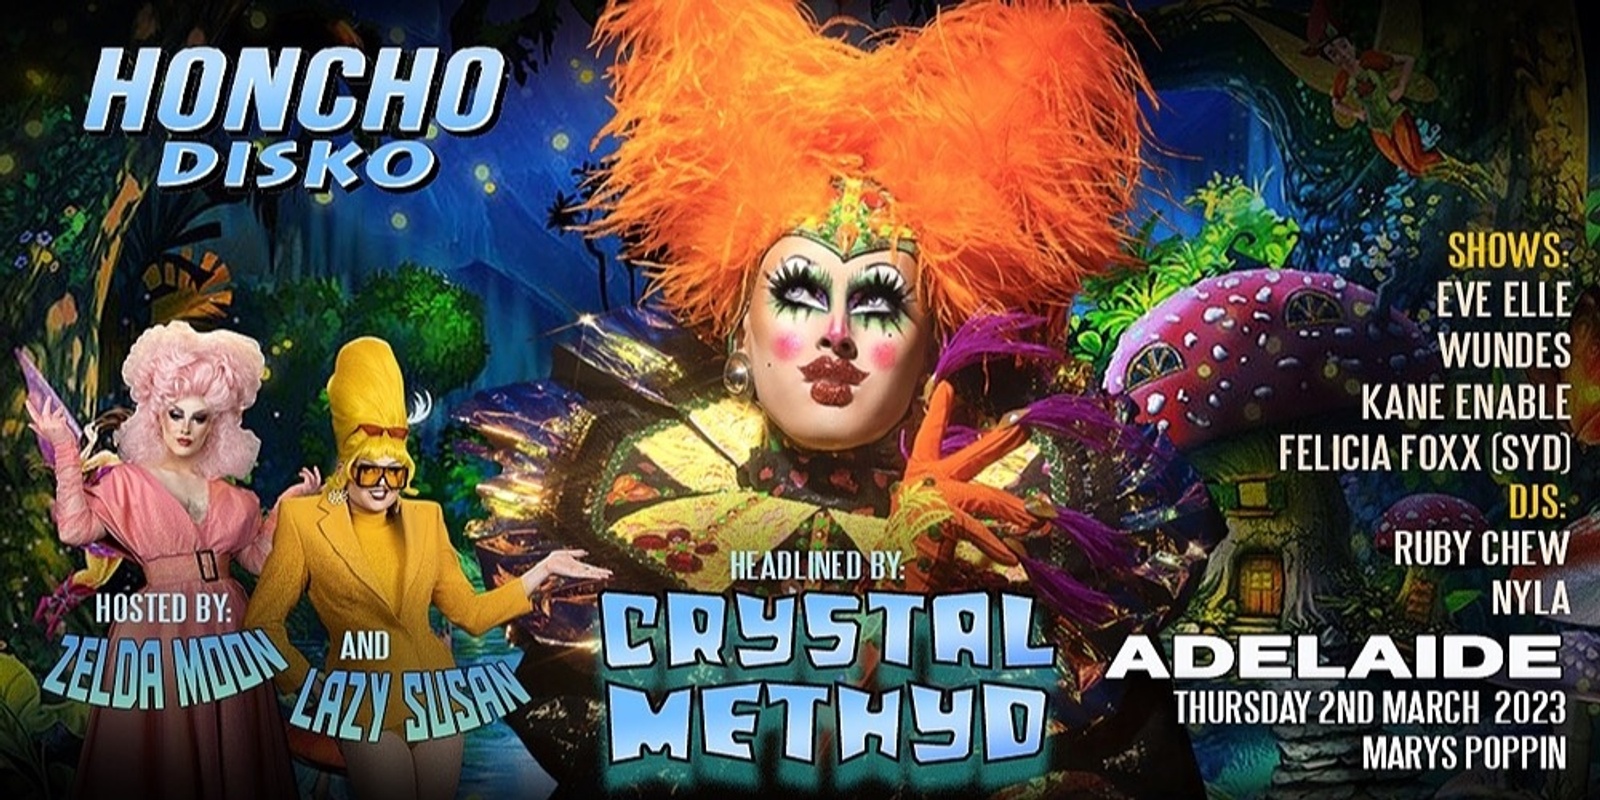 Banner image for HONCHO DISKO x Crystal Methyd WORLD PRIDE Australian Tour 2023 - Adelaide Thursday 9th March 